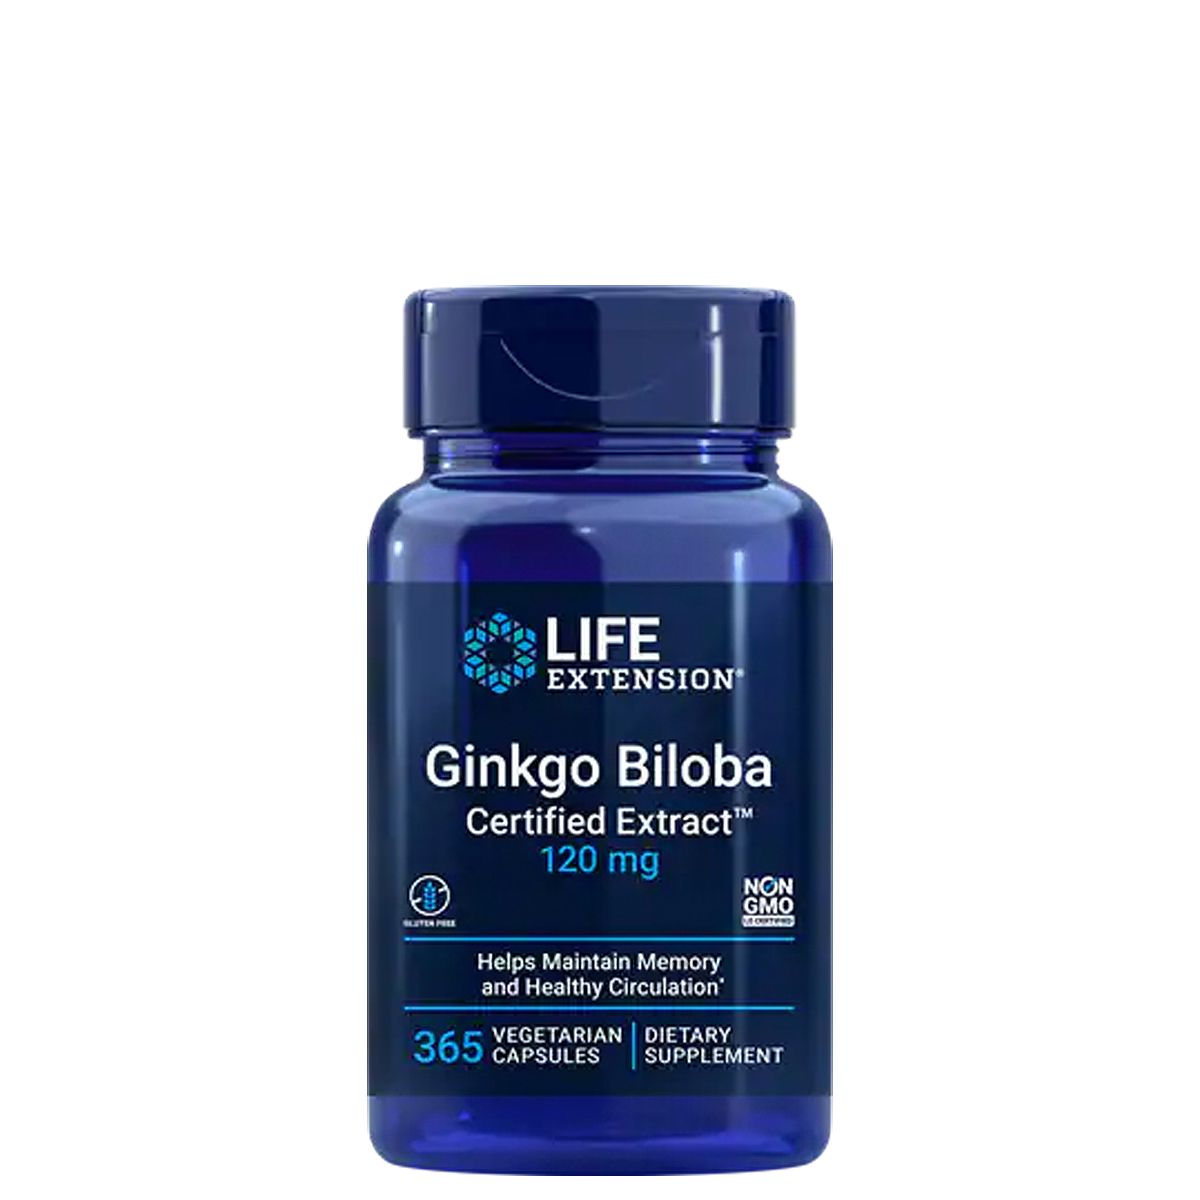 Ginkgo biloba kivonat 120 mg, Life Extension Ginkgo Biloba, 365 kapszula